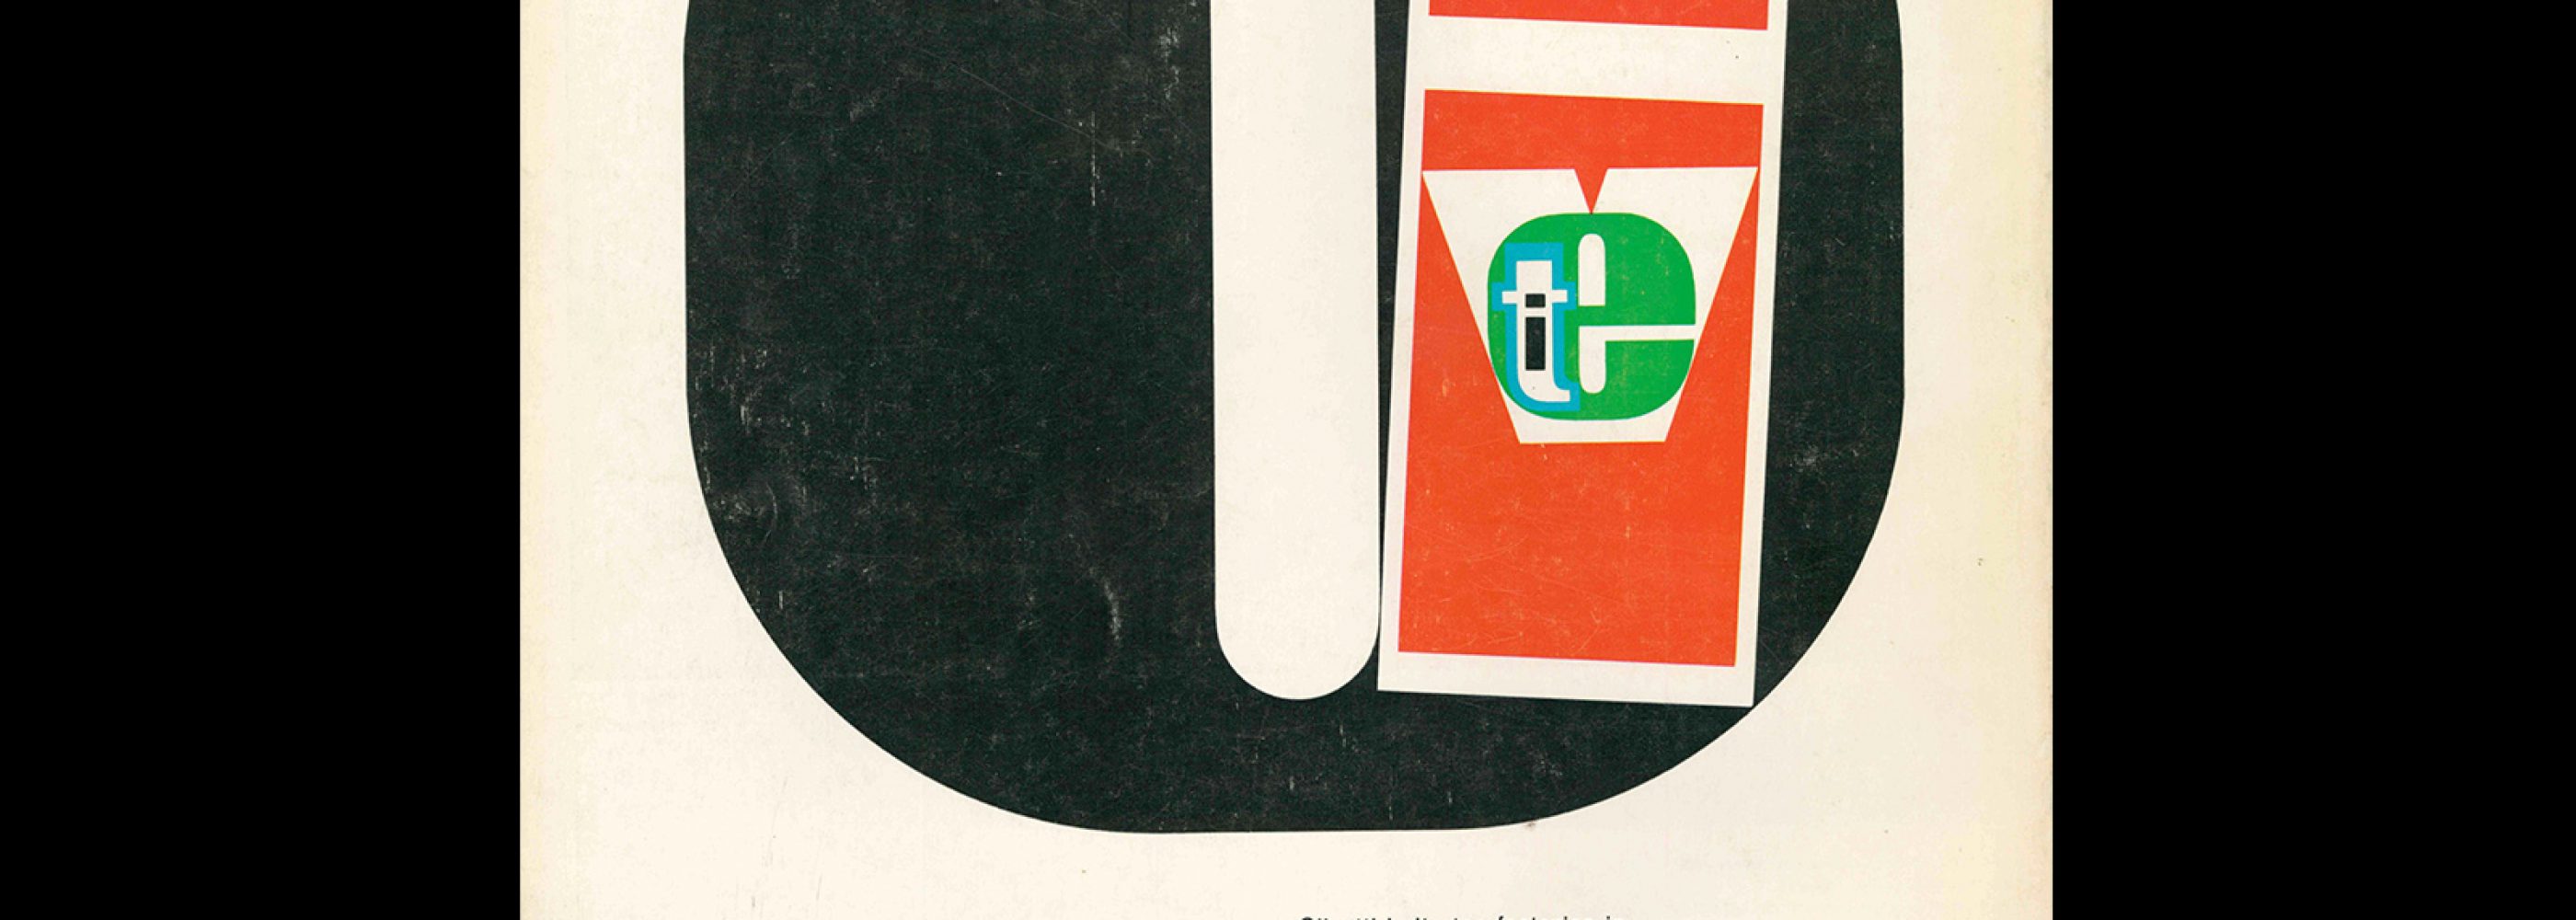 Olivetti, advertisement, 1962. Designed by Giovanni Pintori,